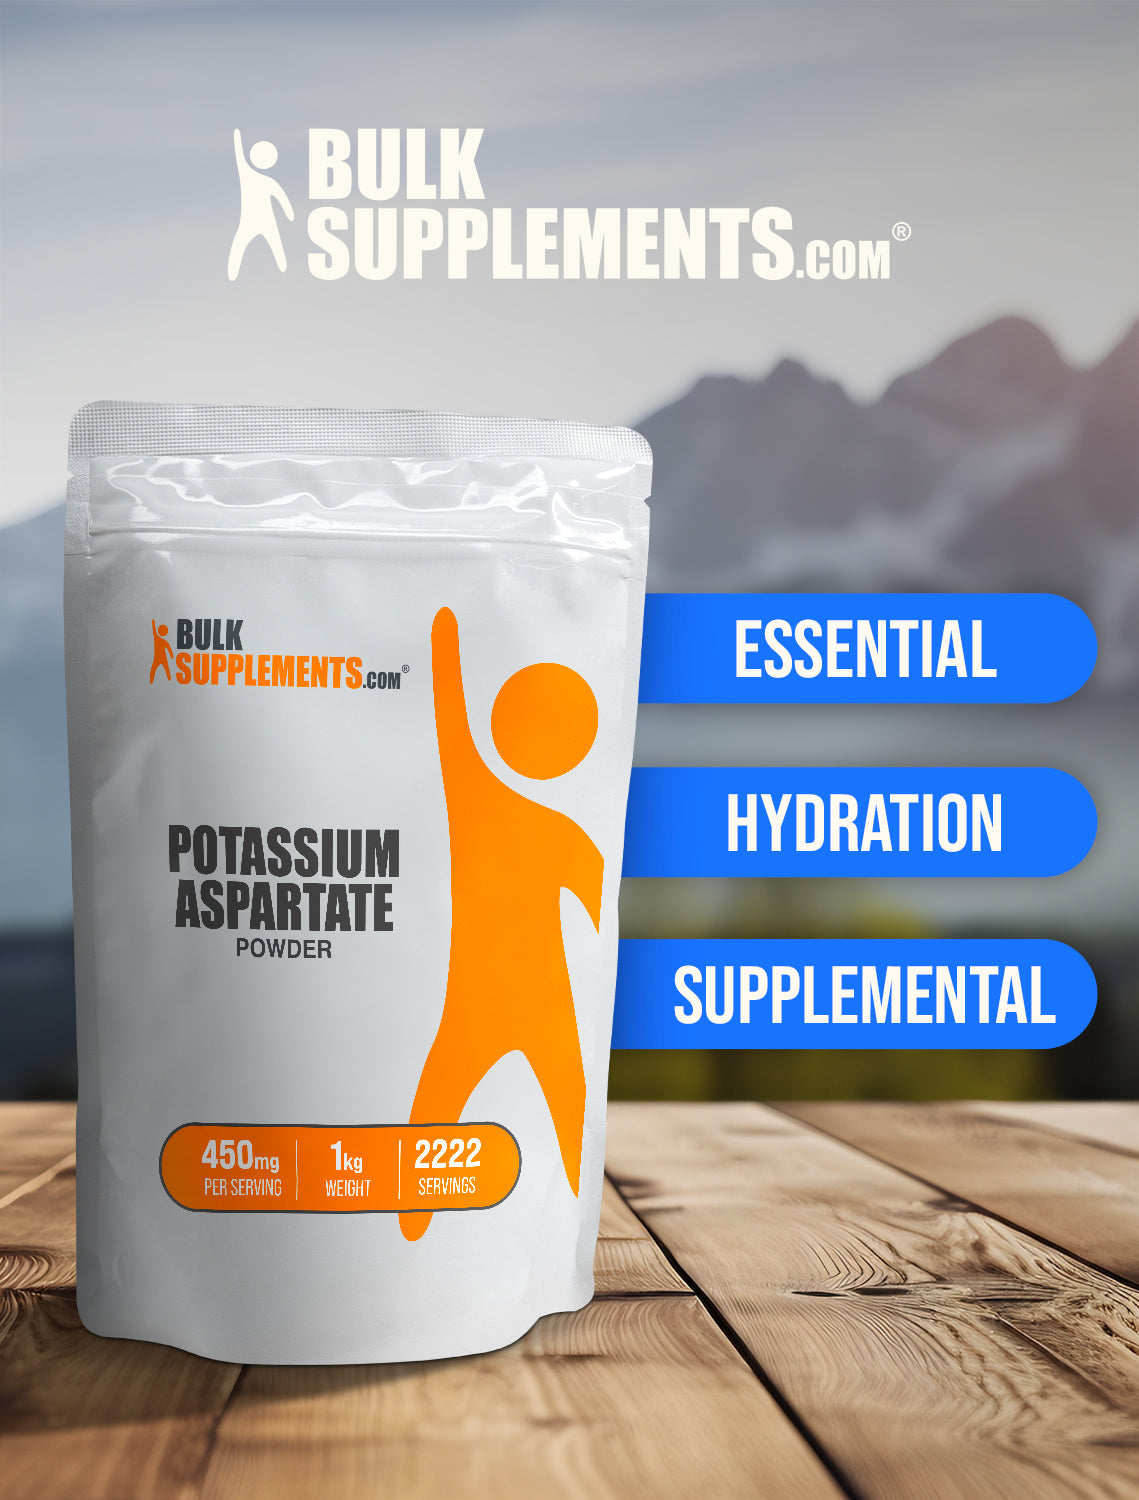 Potassium Aspartate powder keyword image 1kg